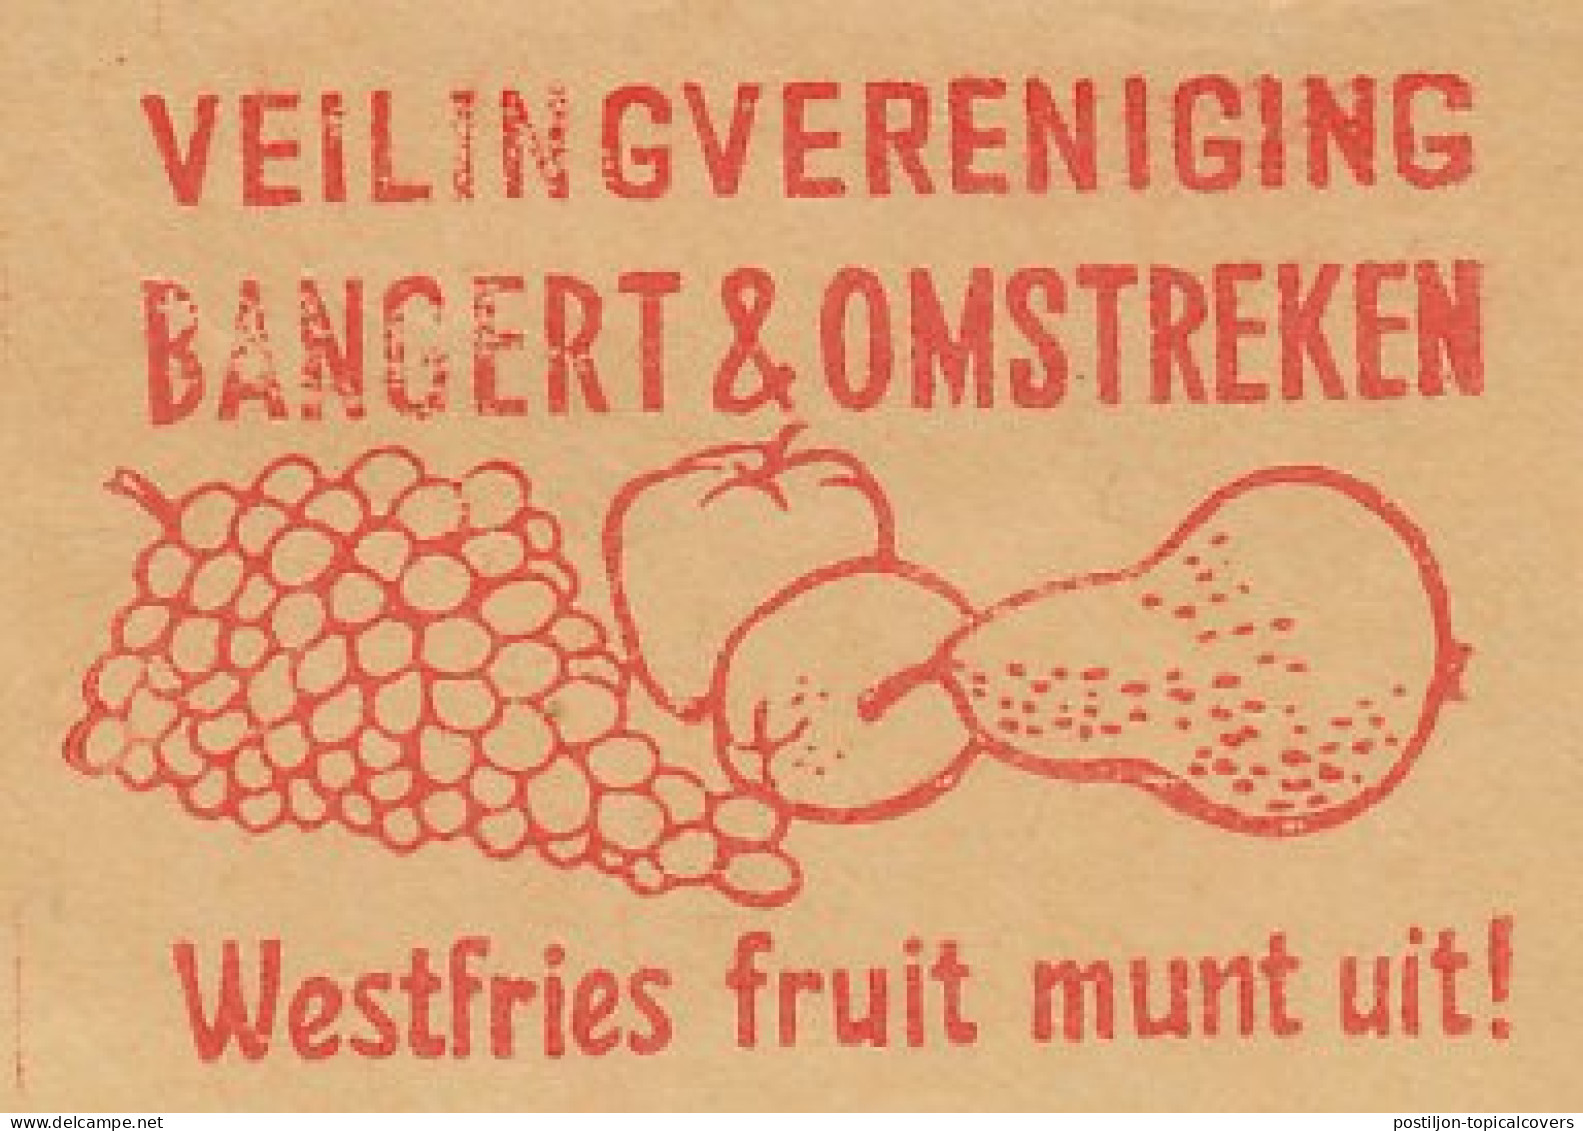 Meter Cut Netherlands 1961 Grapes - Apple - Pear - Obst & Früchte